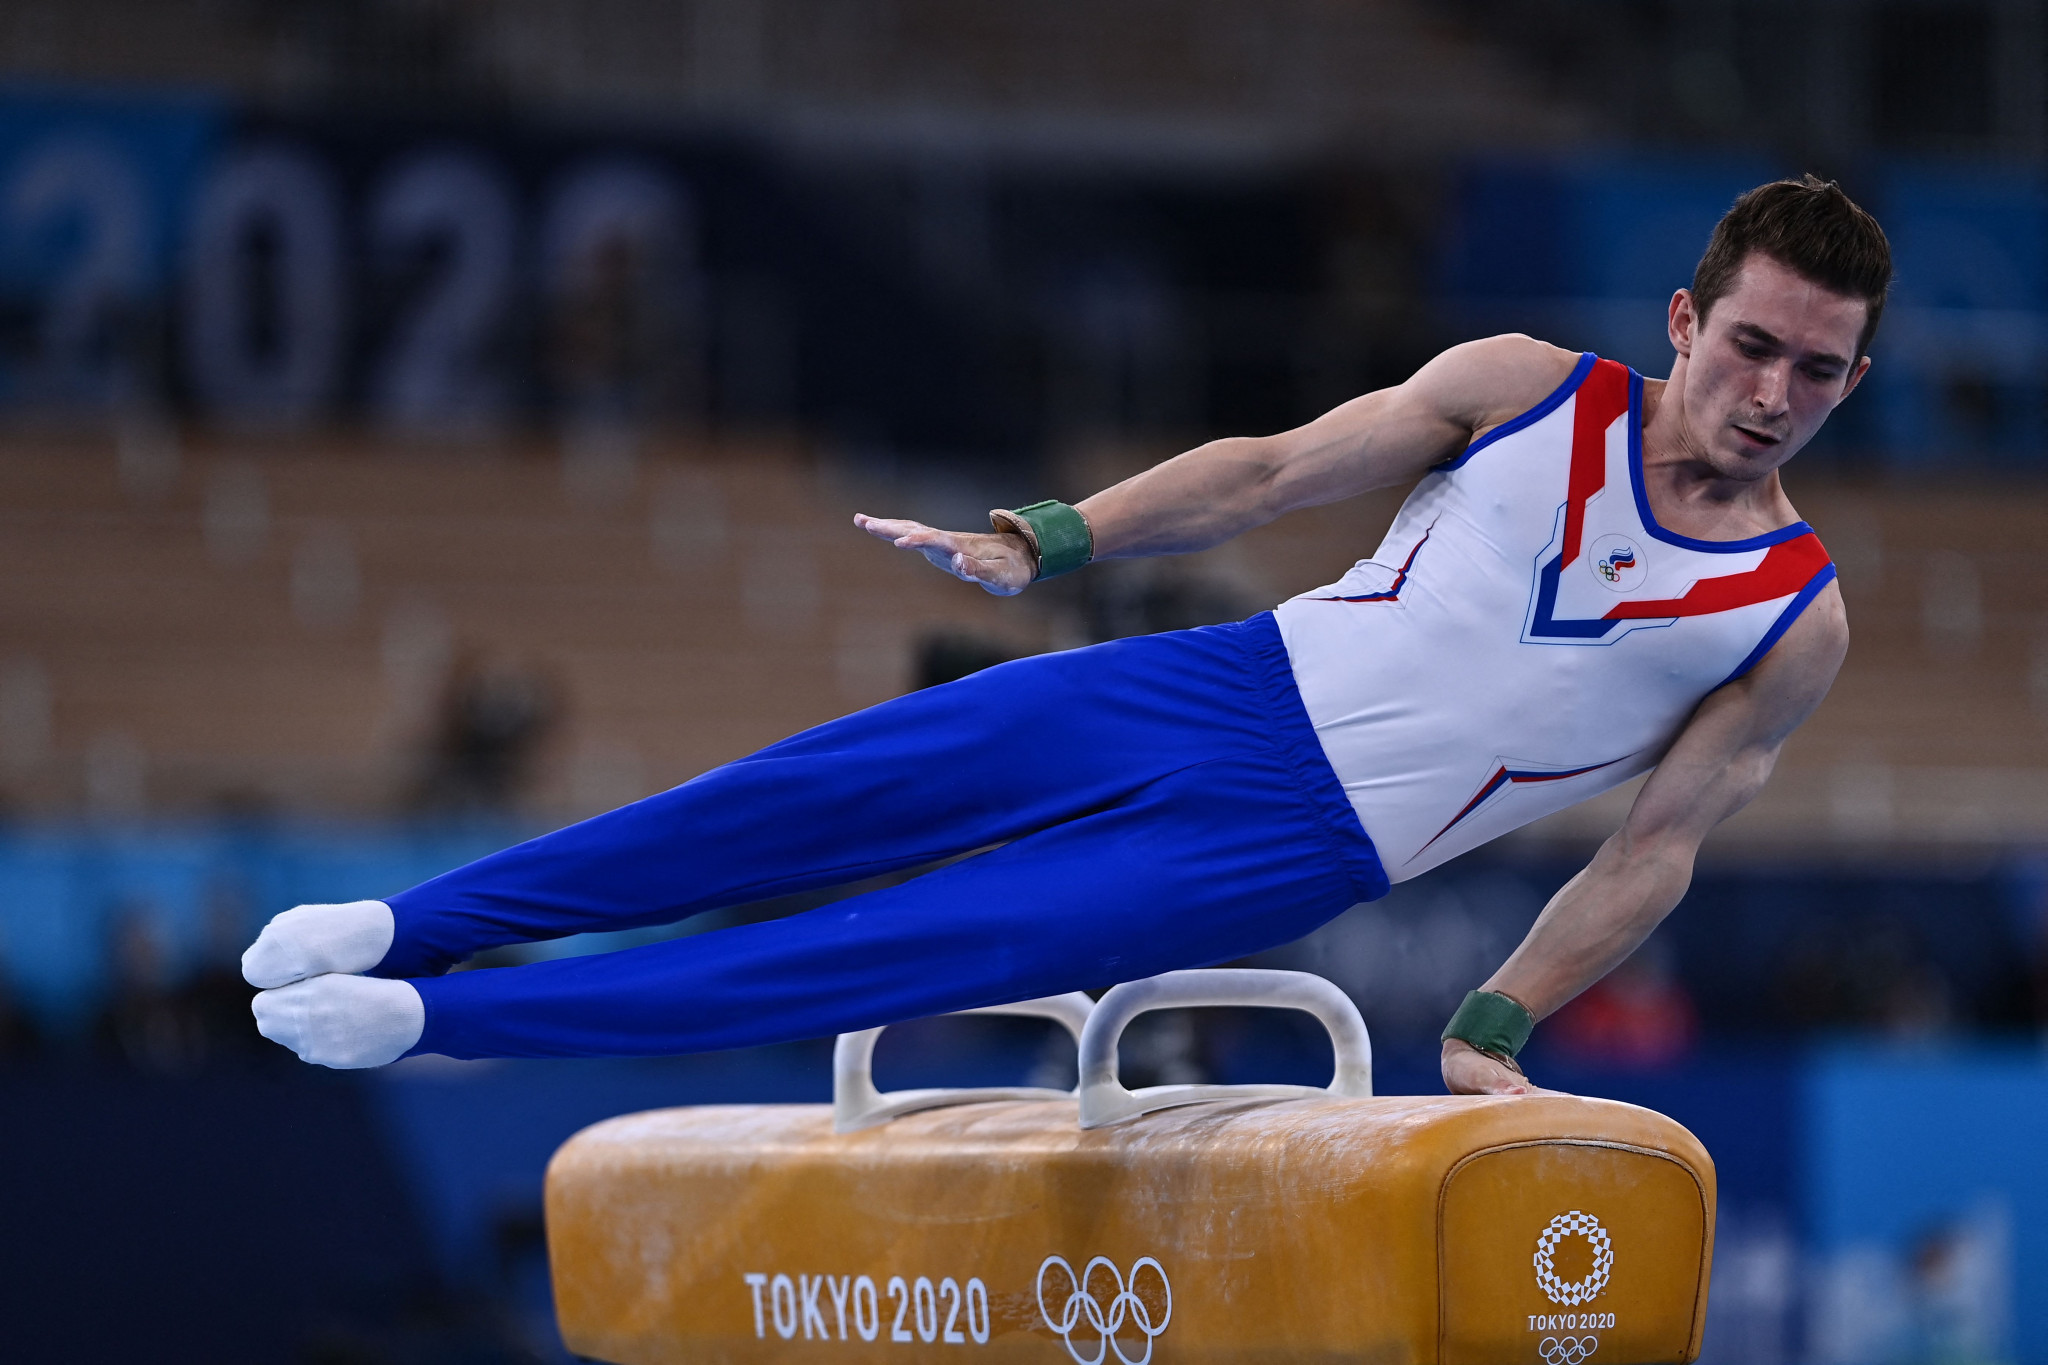 David Belyavskiy won team Olympic gold at Tokyo 2020 ©Getty Images